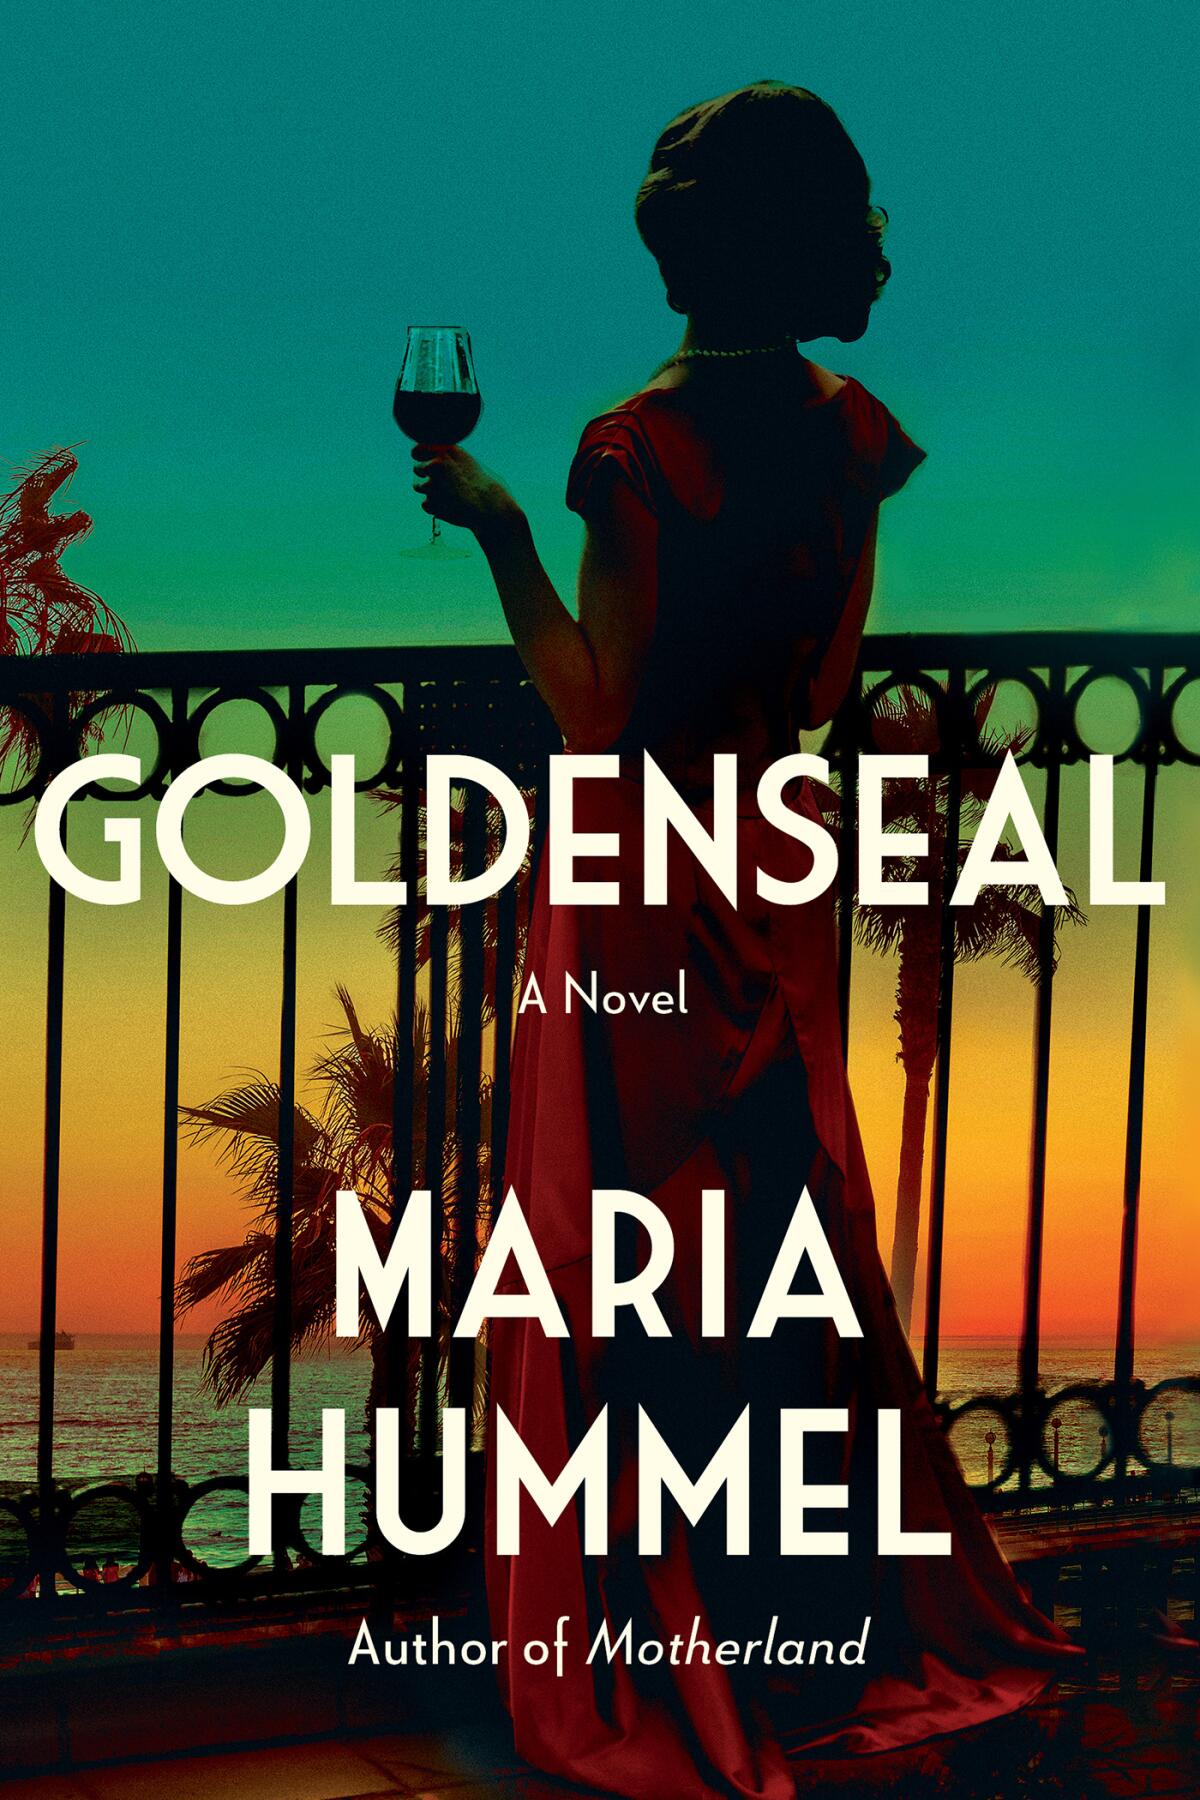 "Goldenseal" by Maria Hummel